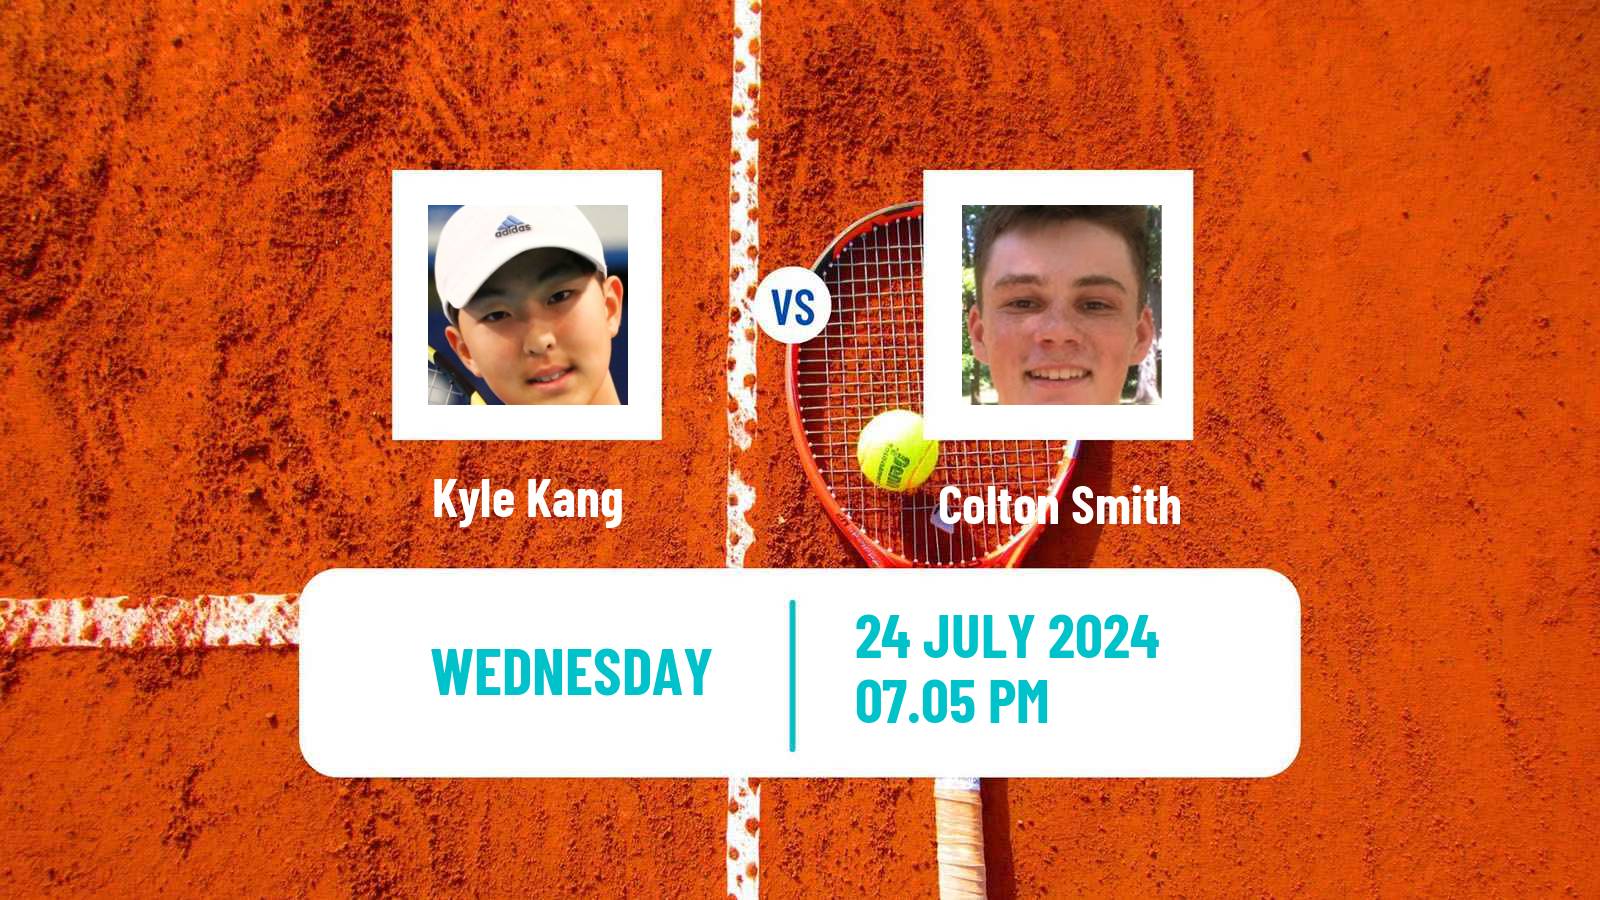 Tennis ITF M25 Champaign Il Men Kyle Kang - Colton Smith